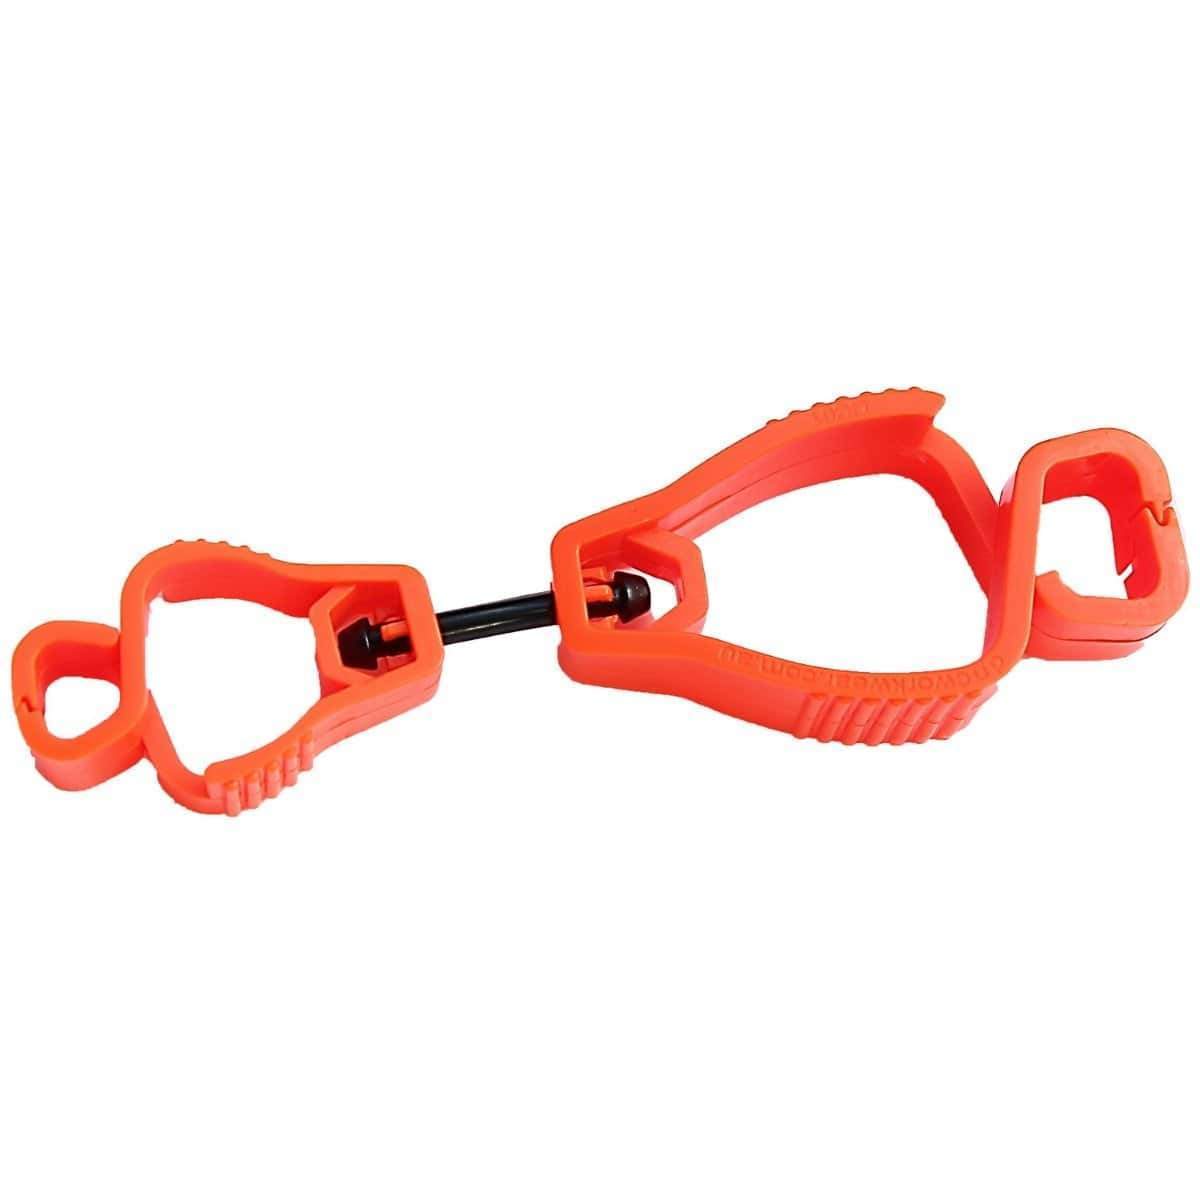 Dnc Workwear Super Jaws Glove Clips X12 - GC01 PPE DNC Workwear HiVis Orange One Size 